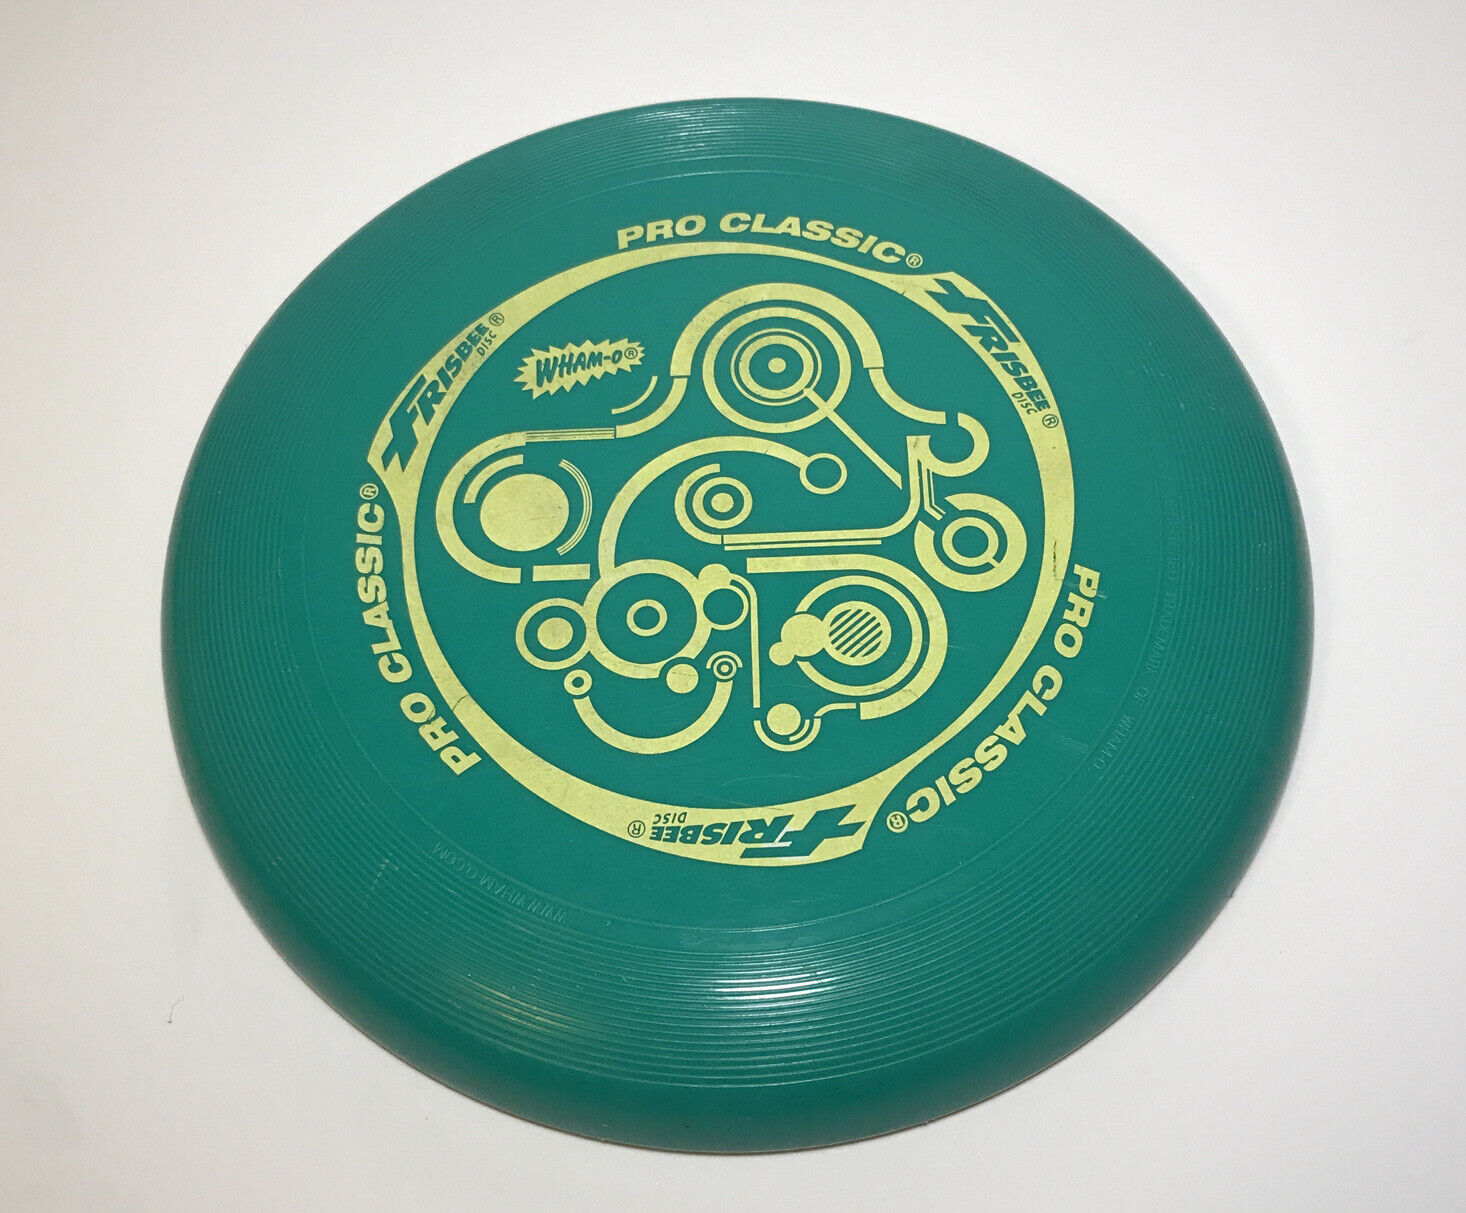 Wham-O Pro Classic Frisbee Disc Green